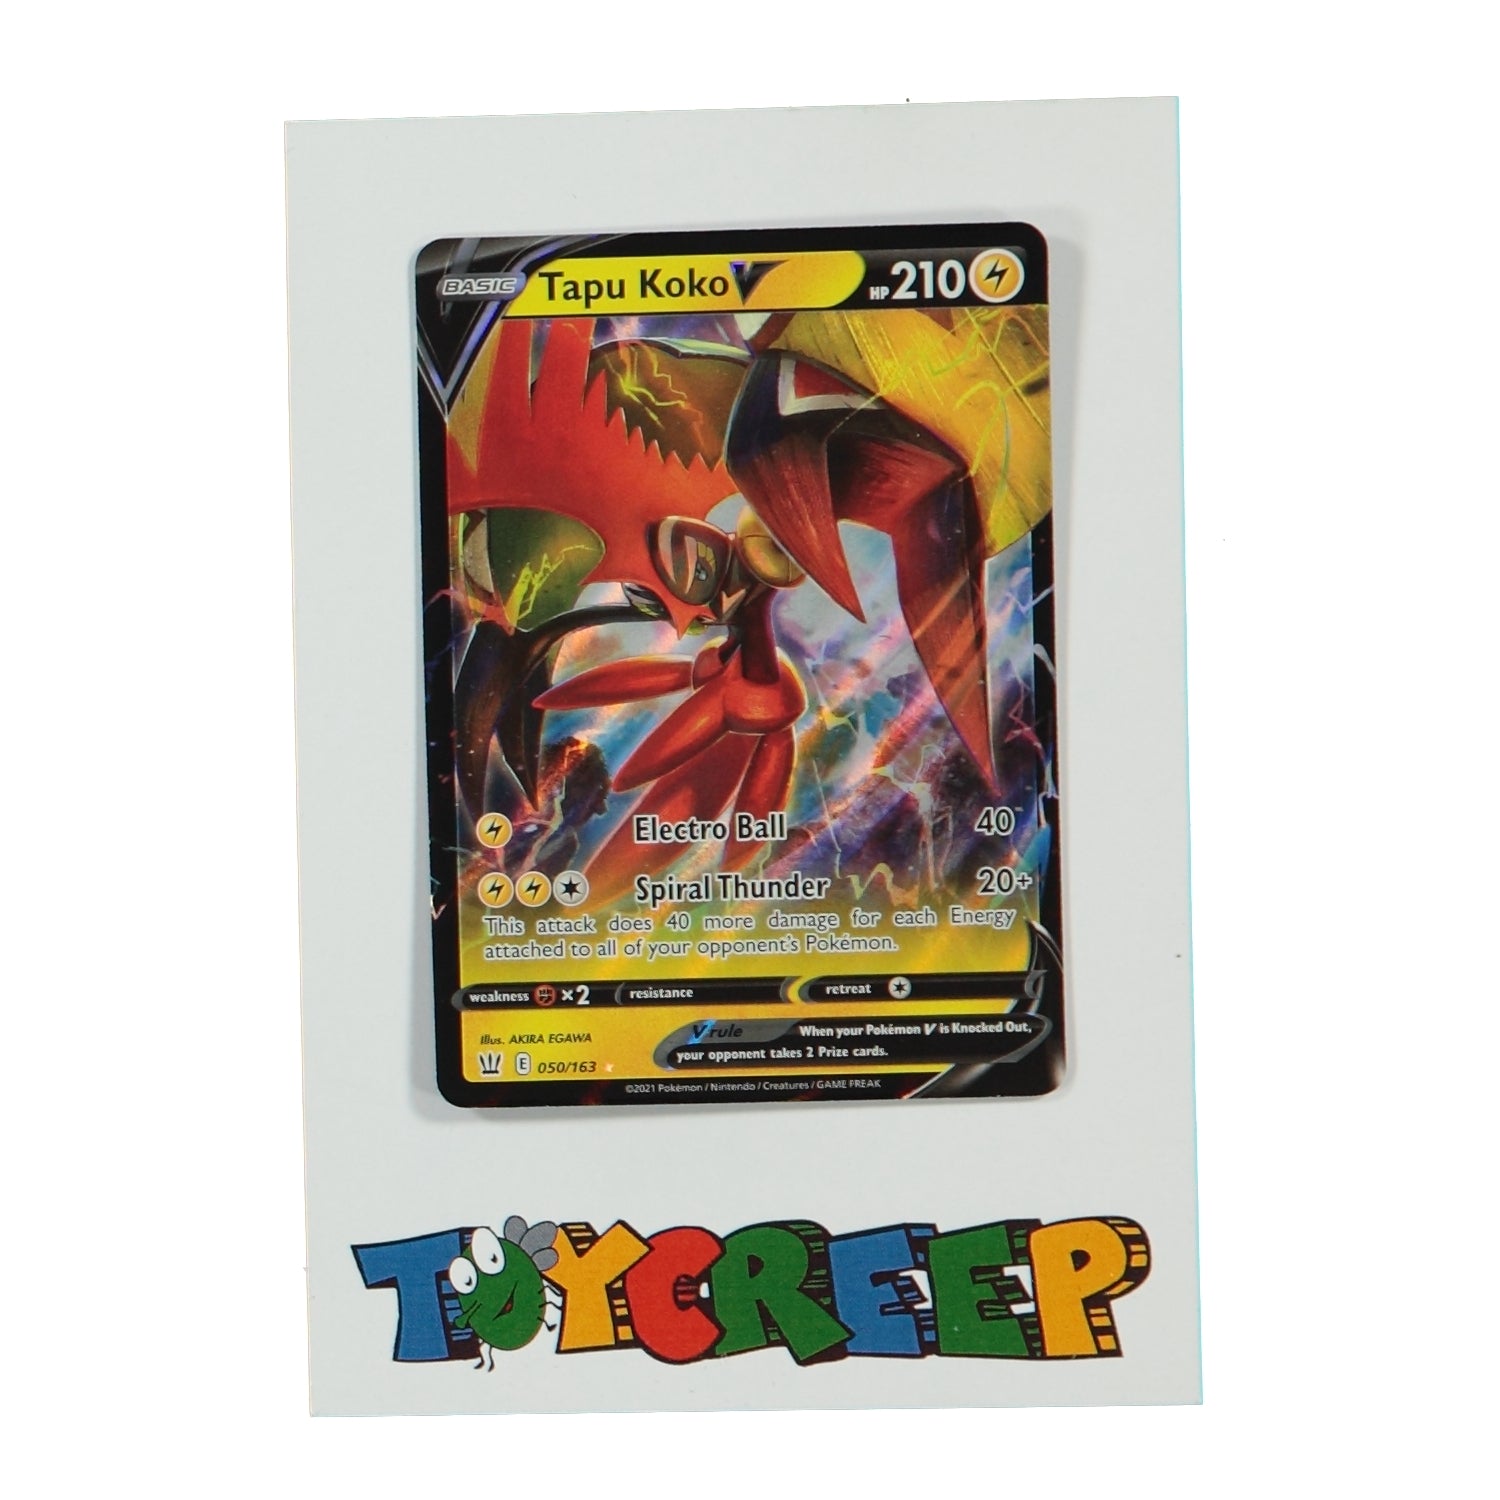 Pokemon TCG: GX Tapu Koko Figure Collection Box